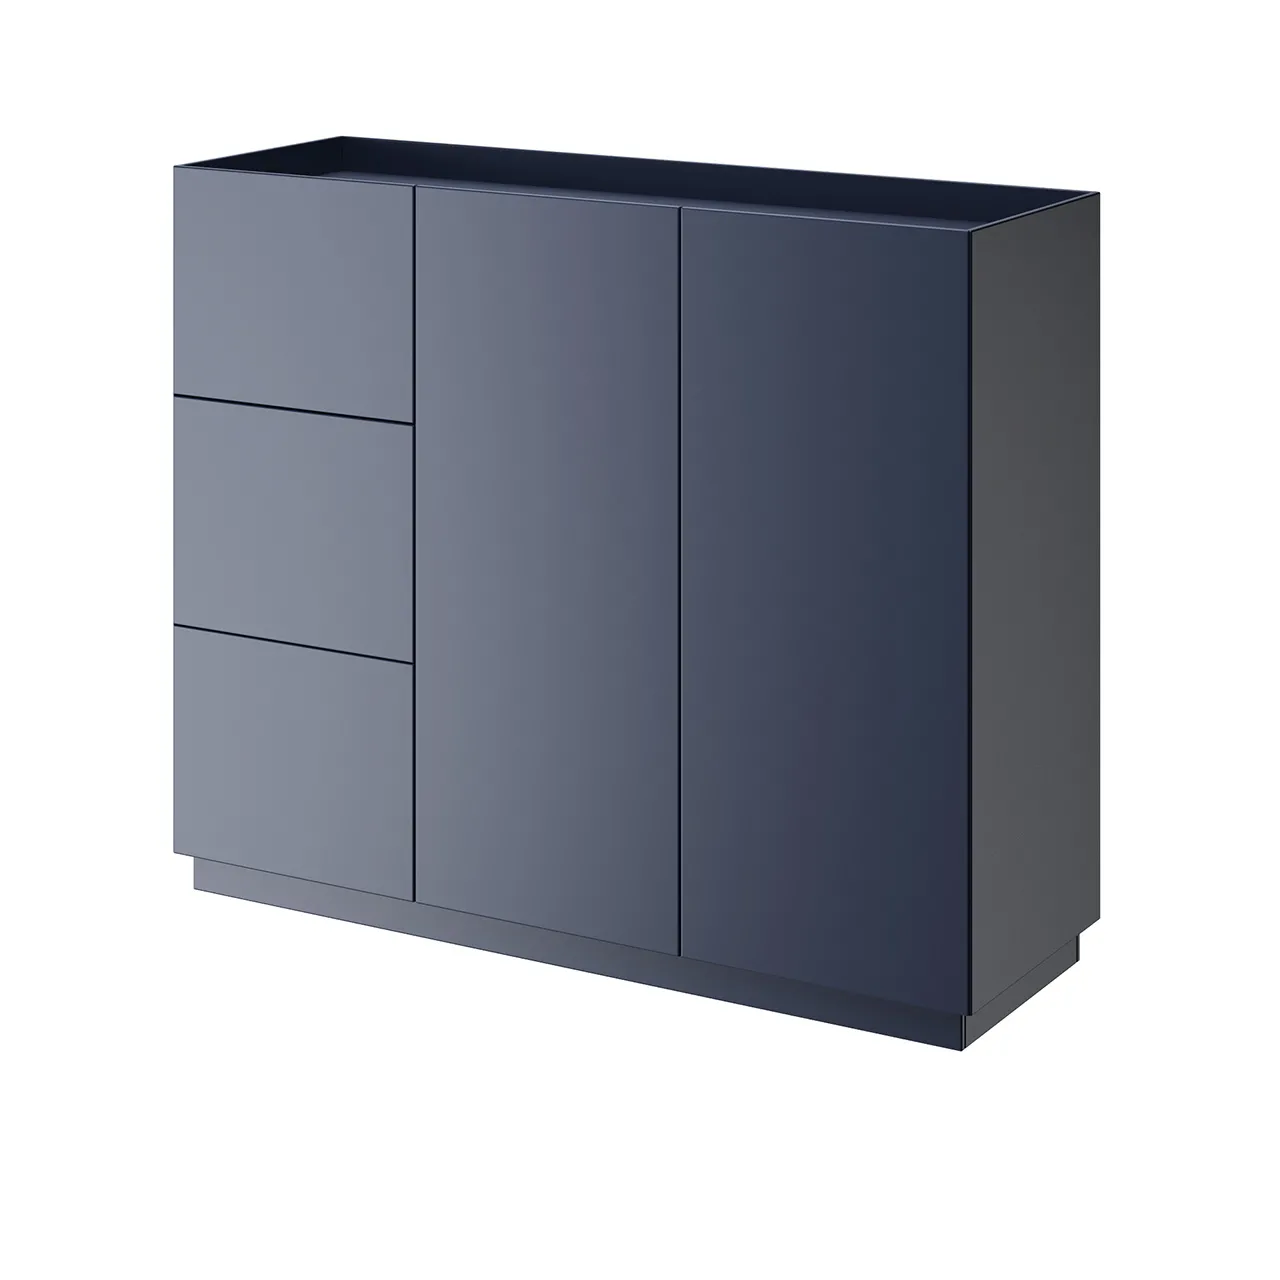 Furniture – hesperide-dyo-sideboard-w120-by-schonbuch